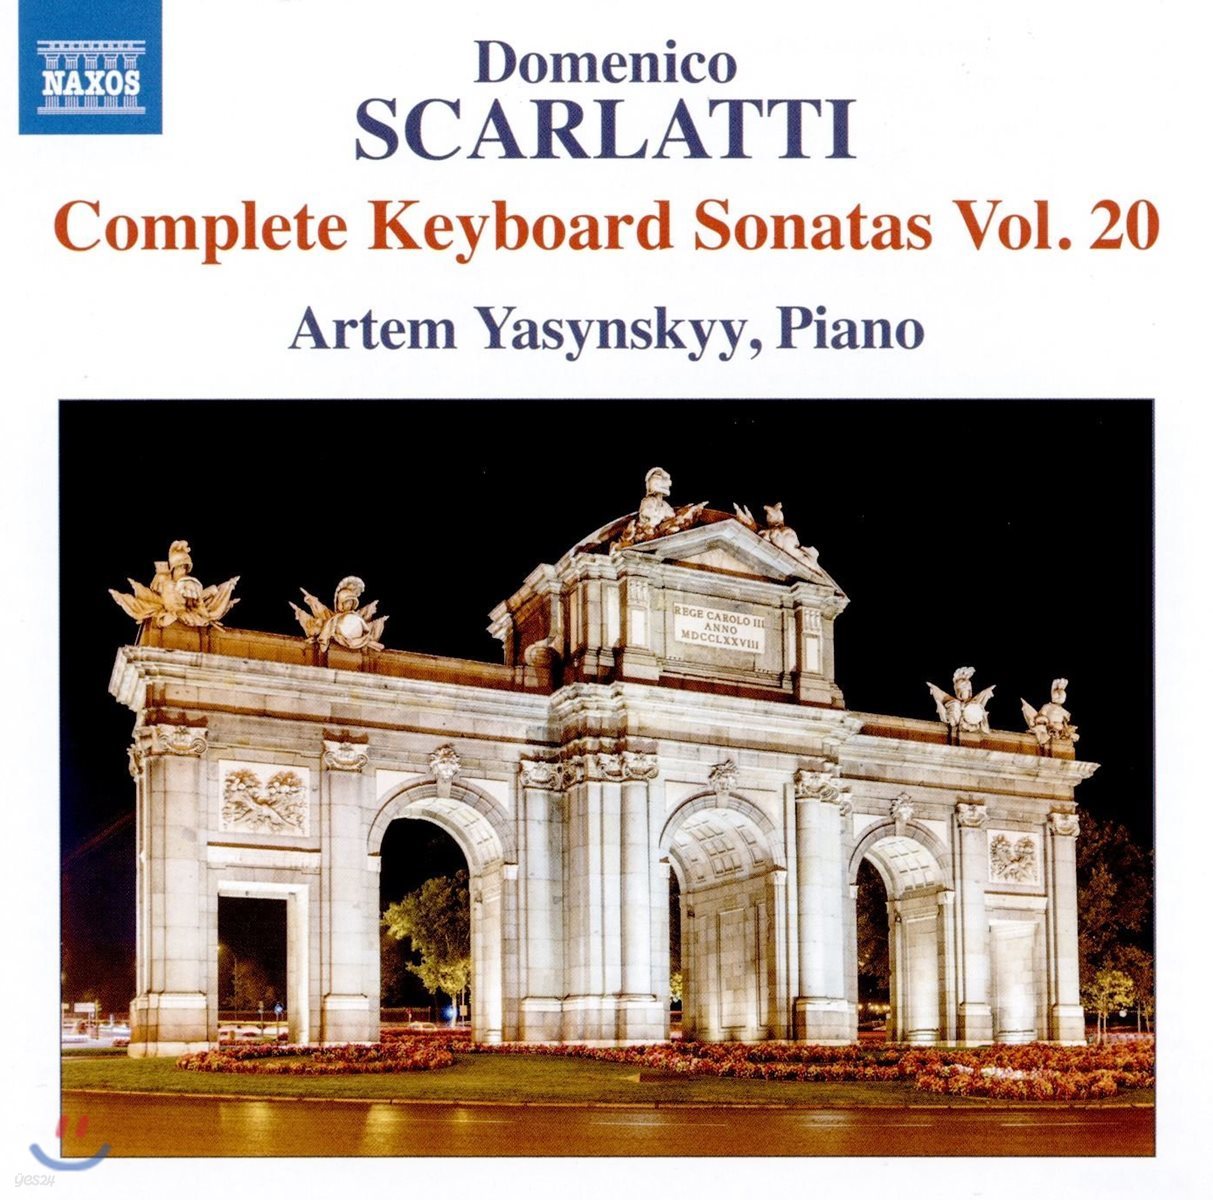 Artem Yasynskyy 도메니코 스카를라티: 건반 소나타 전곡 20집 (Domenico Scarlatti: Keyboard Sonatas Vol.20)